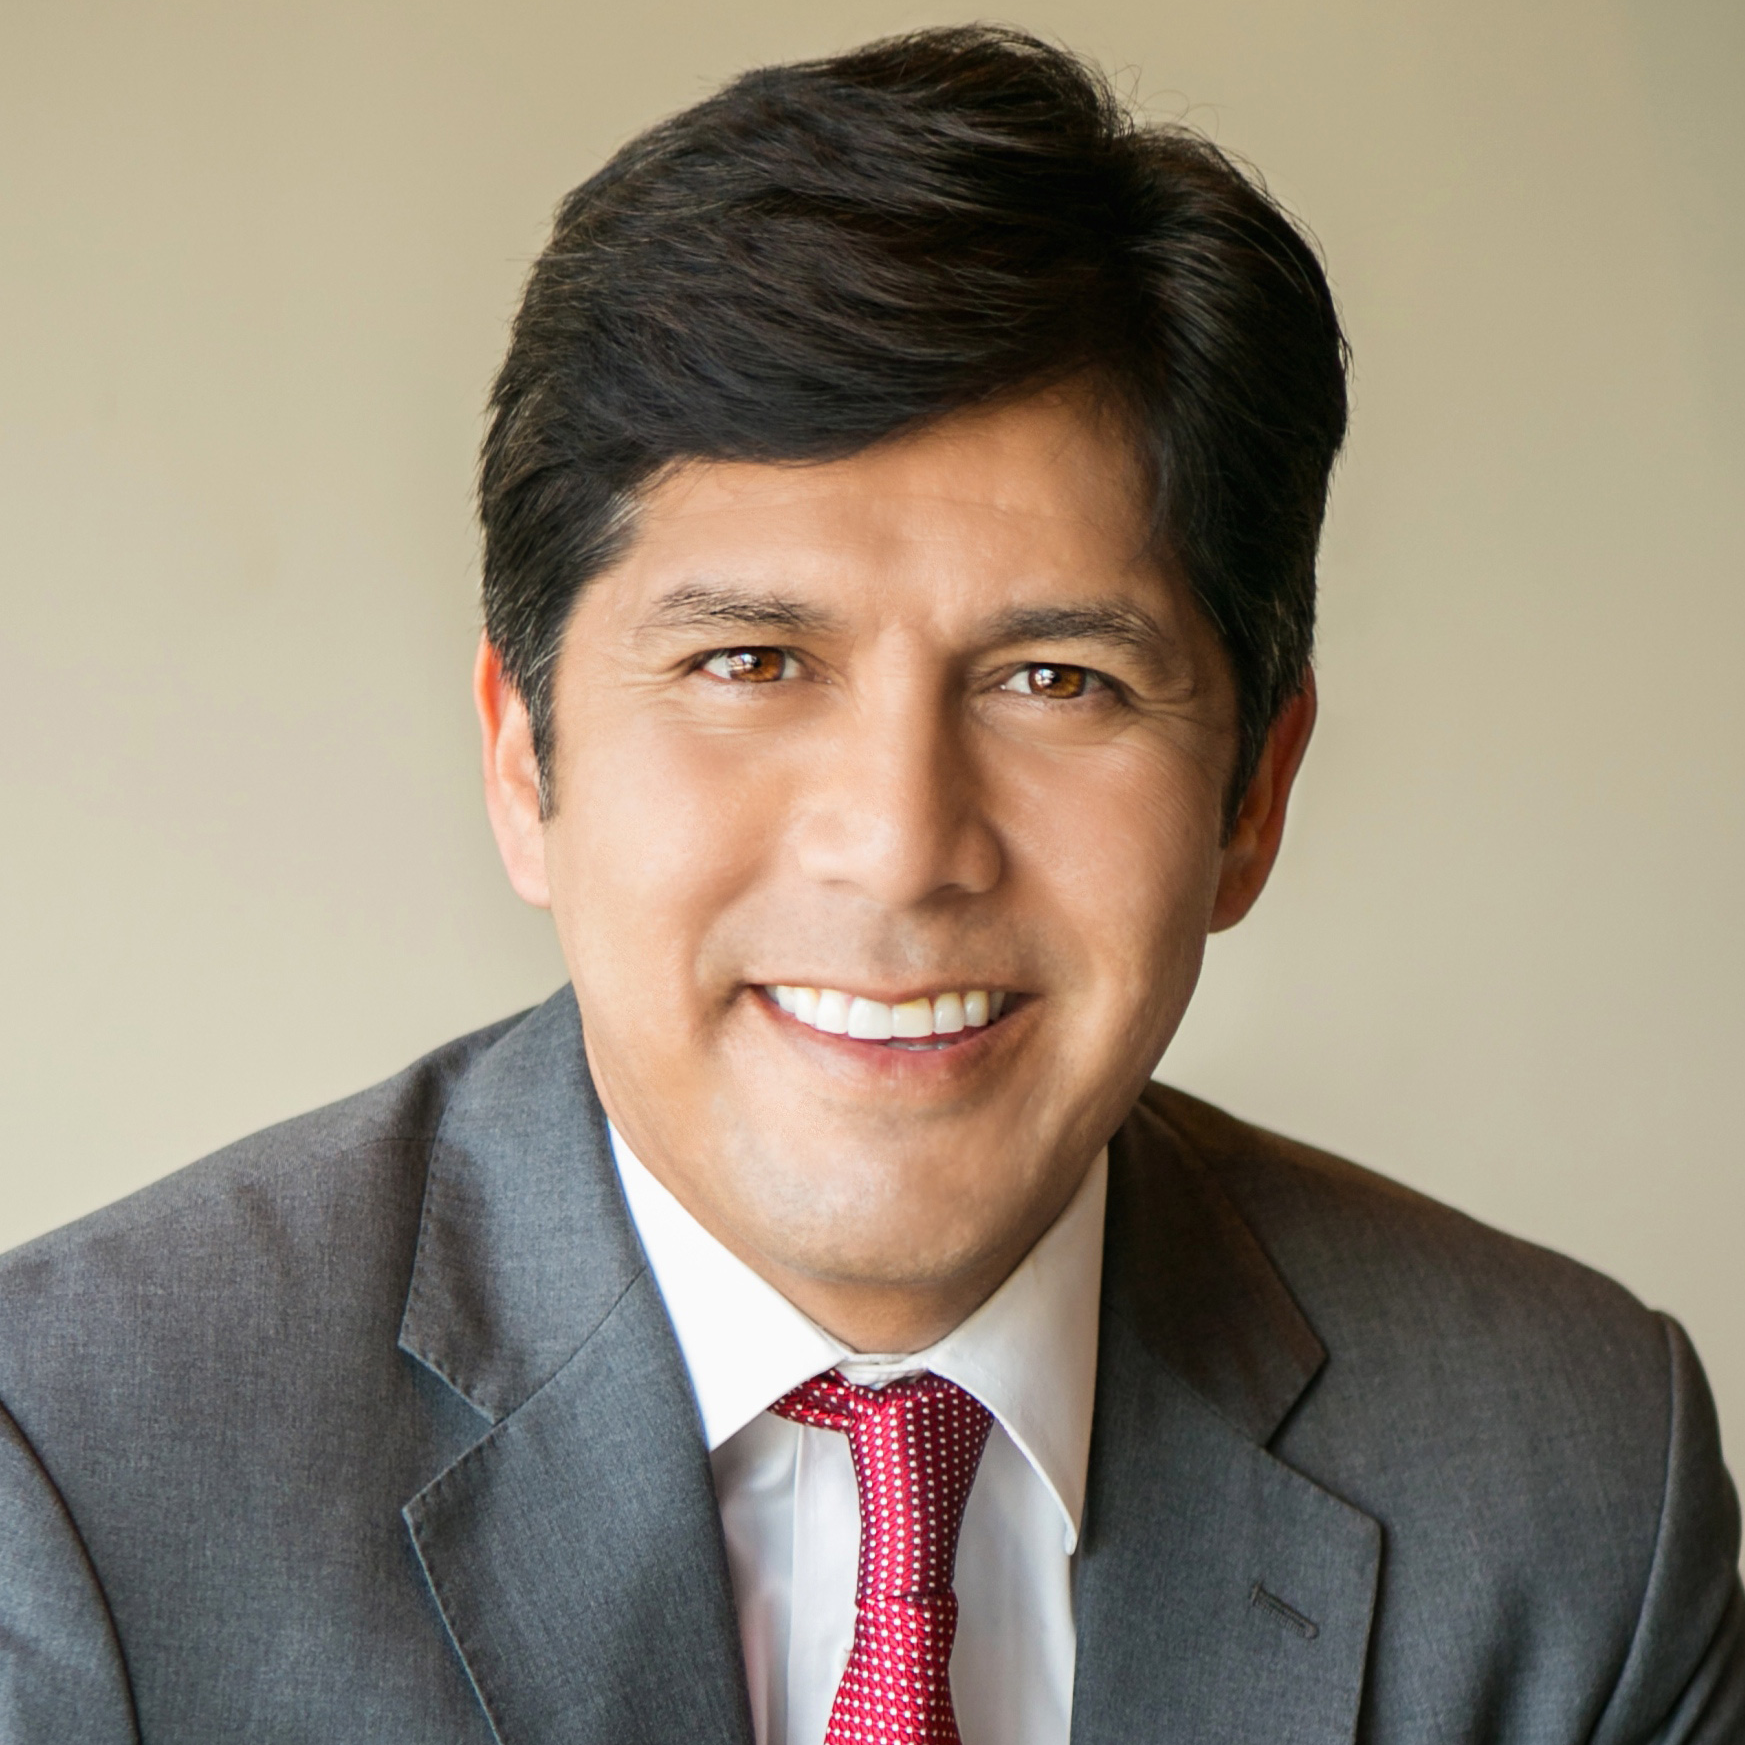 Kevin de León, former President pro Tempore of the California State Senate